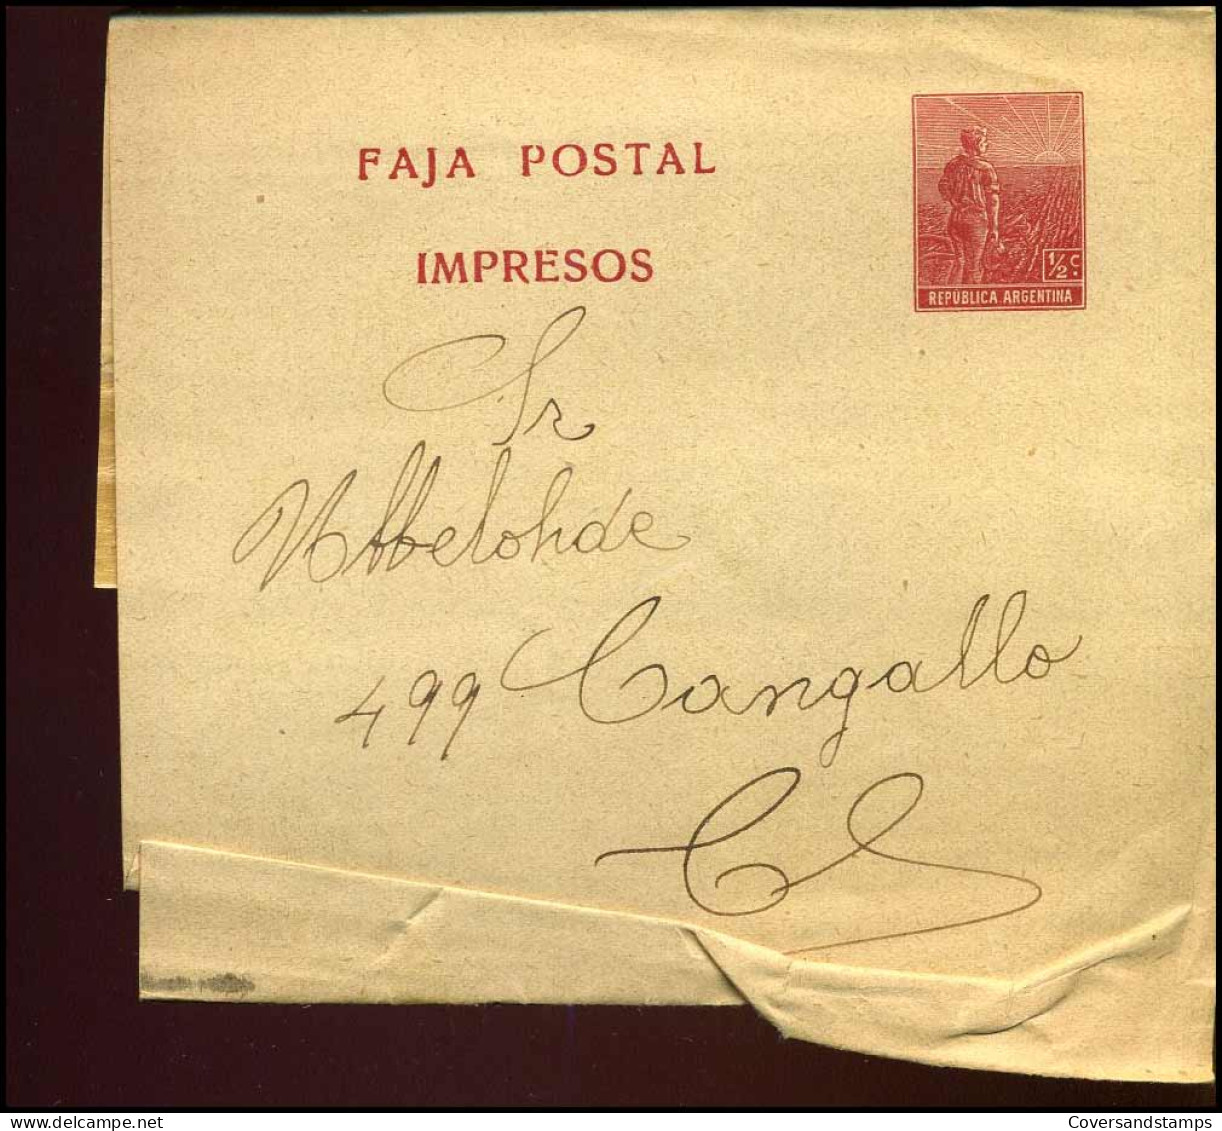 Republica Argentina, Faja Postal, Impresos - Entiers Postaux